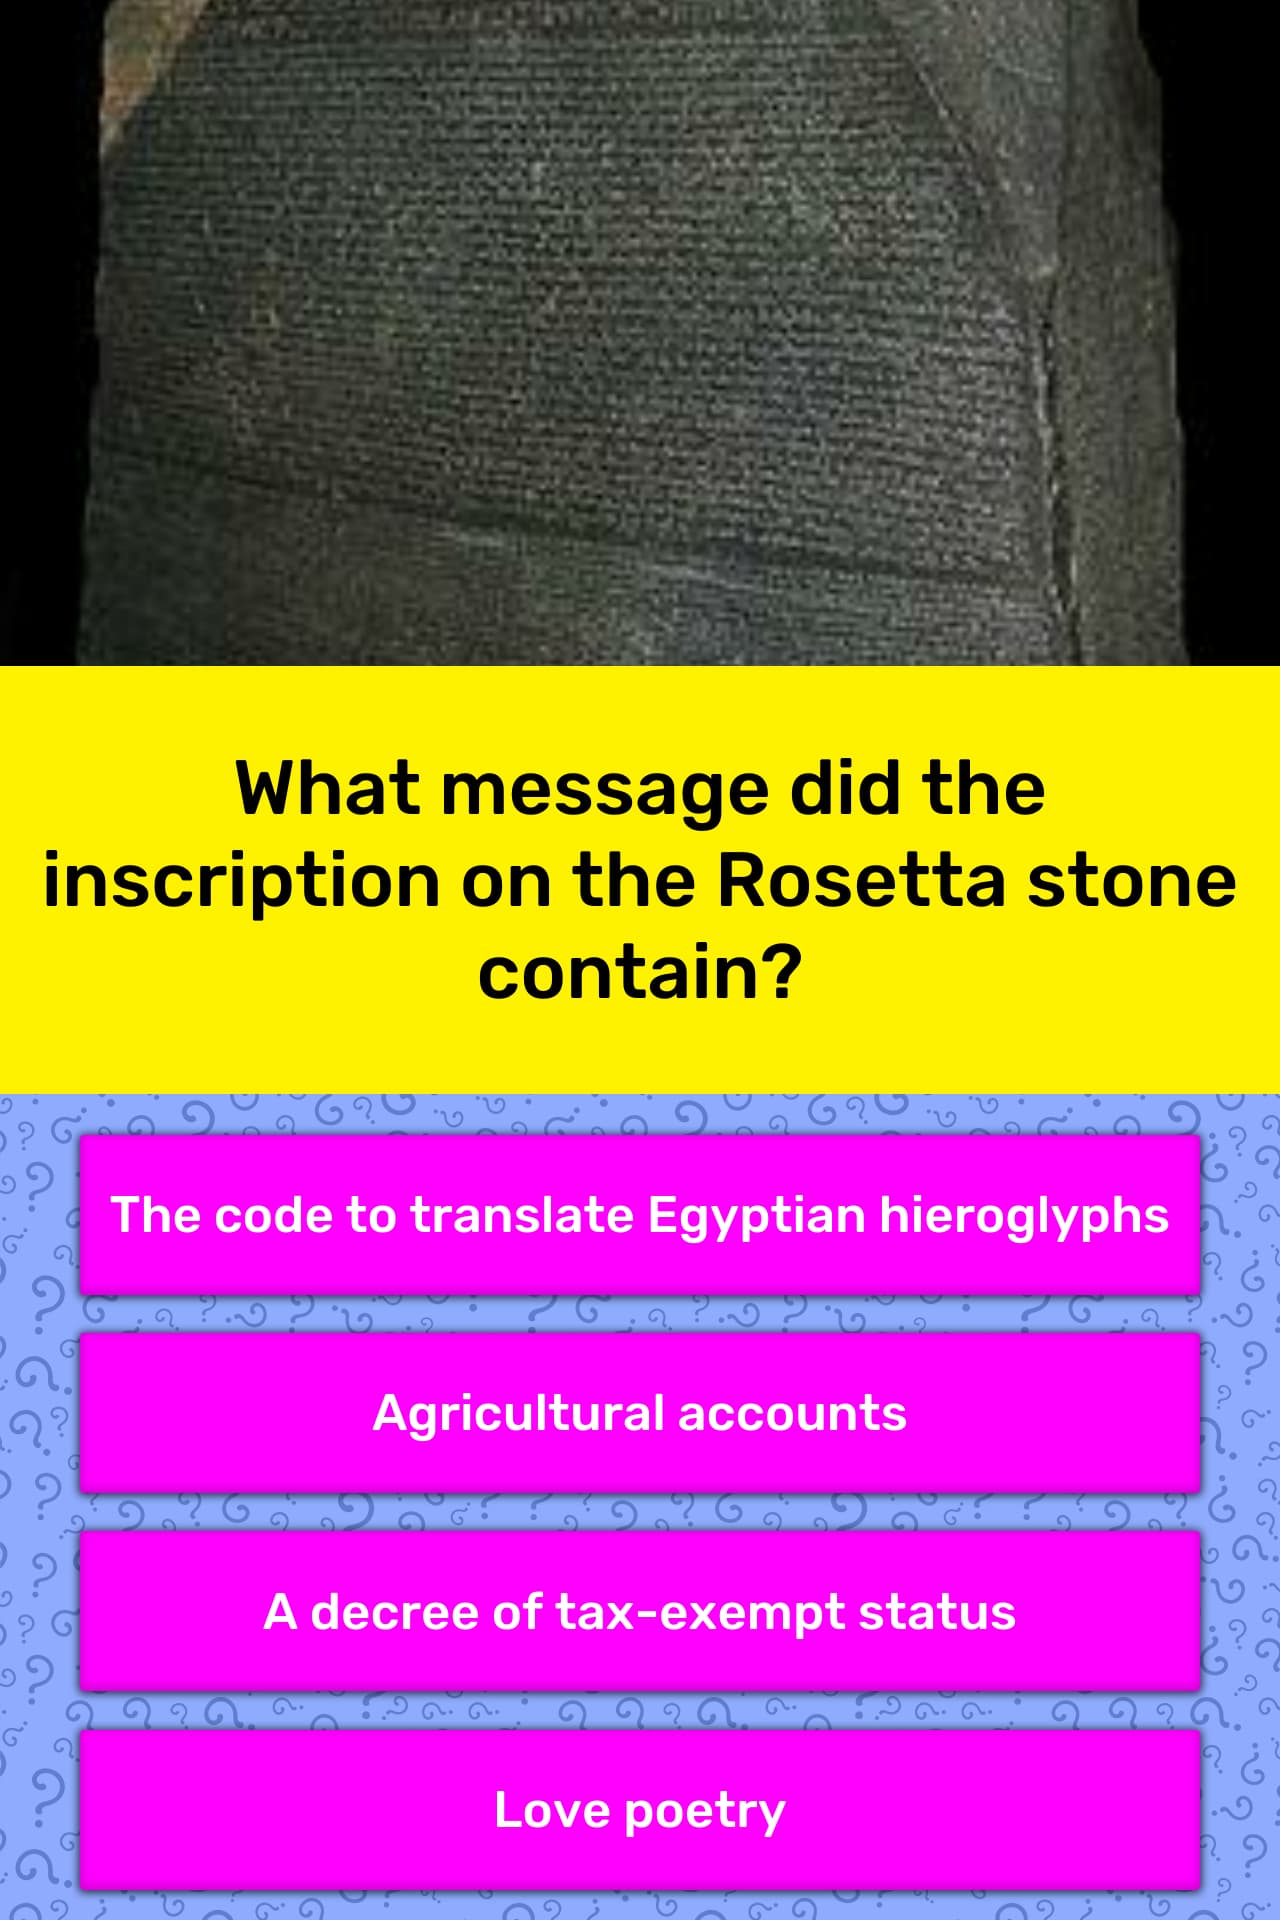 rosetta stone message